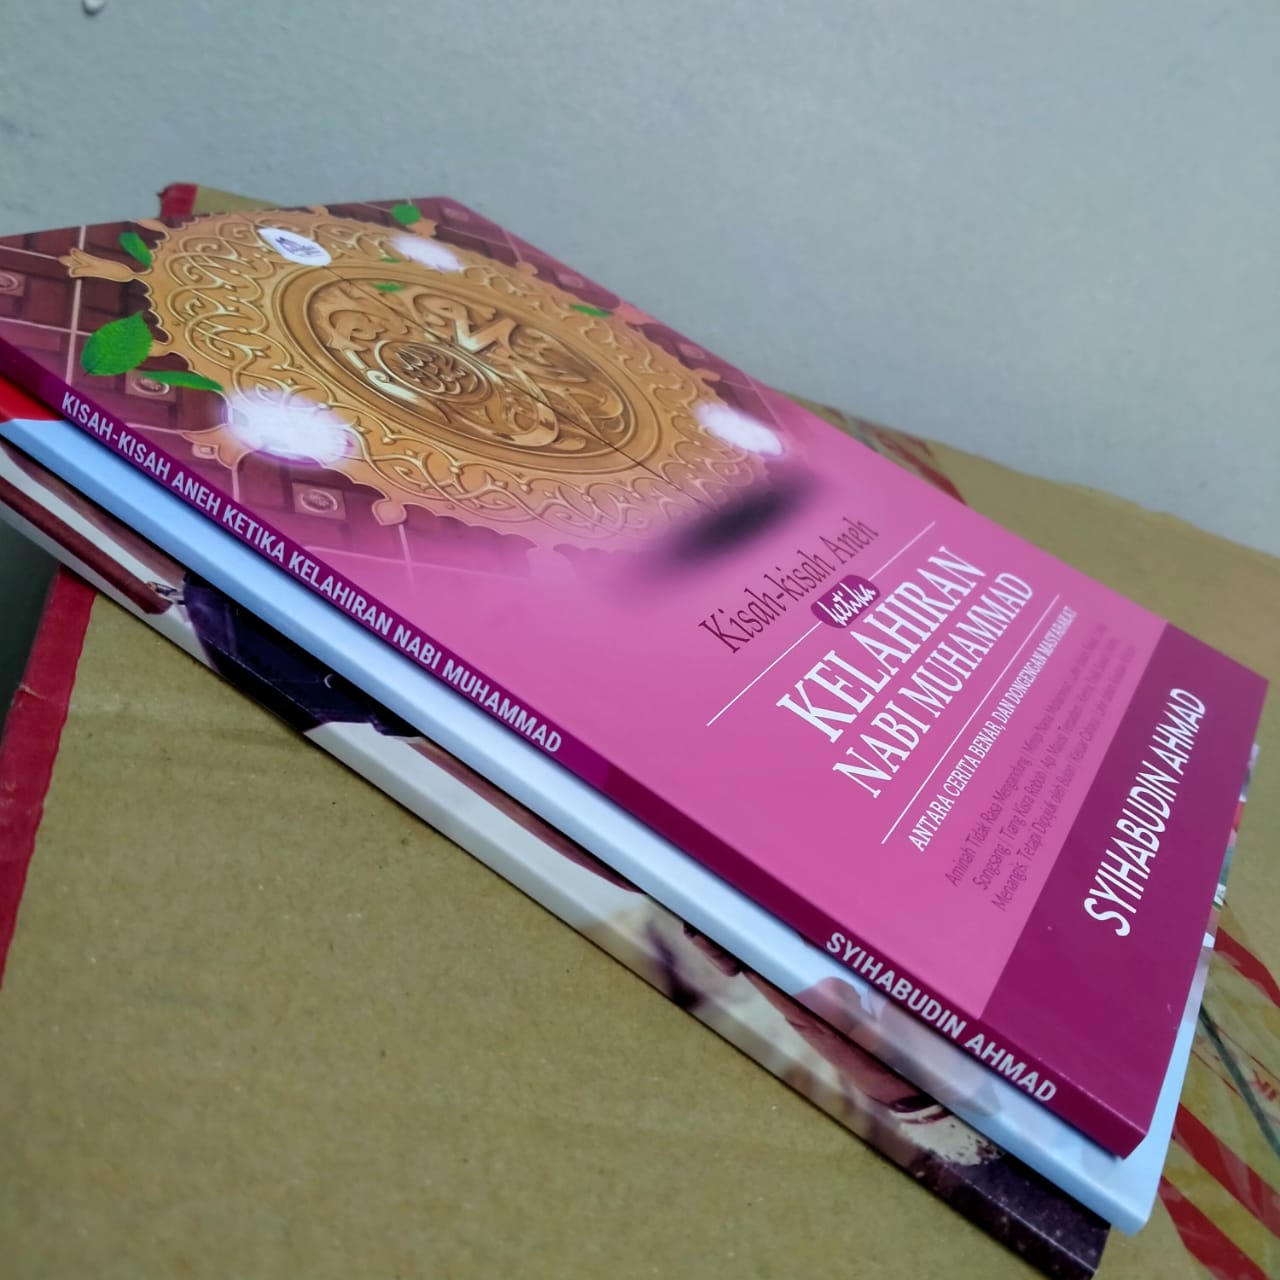 Kombo Buku Nipis by Syihabudin Ahmad